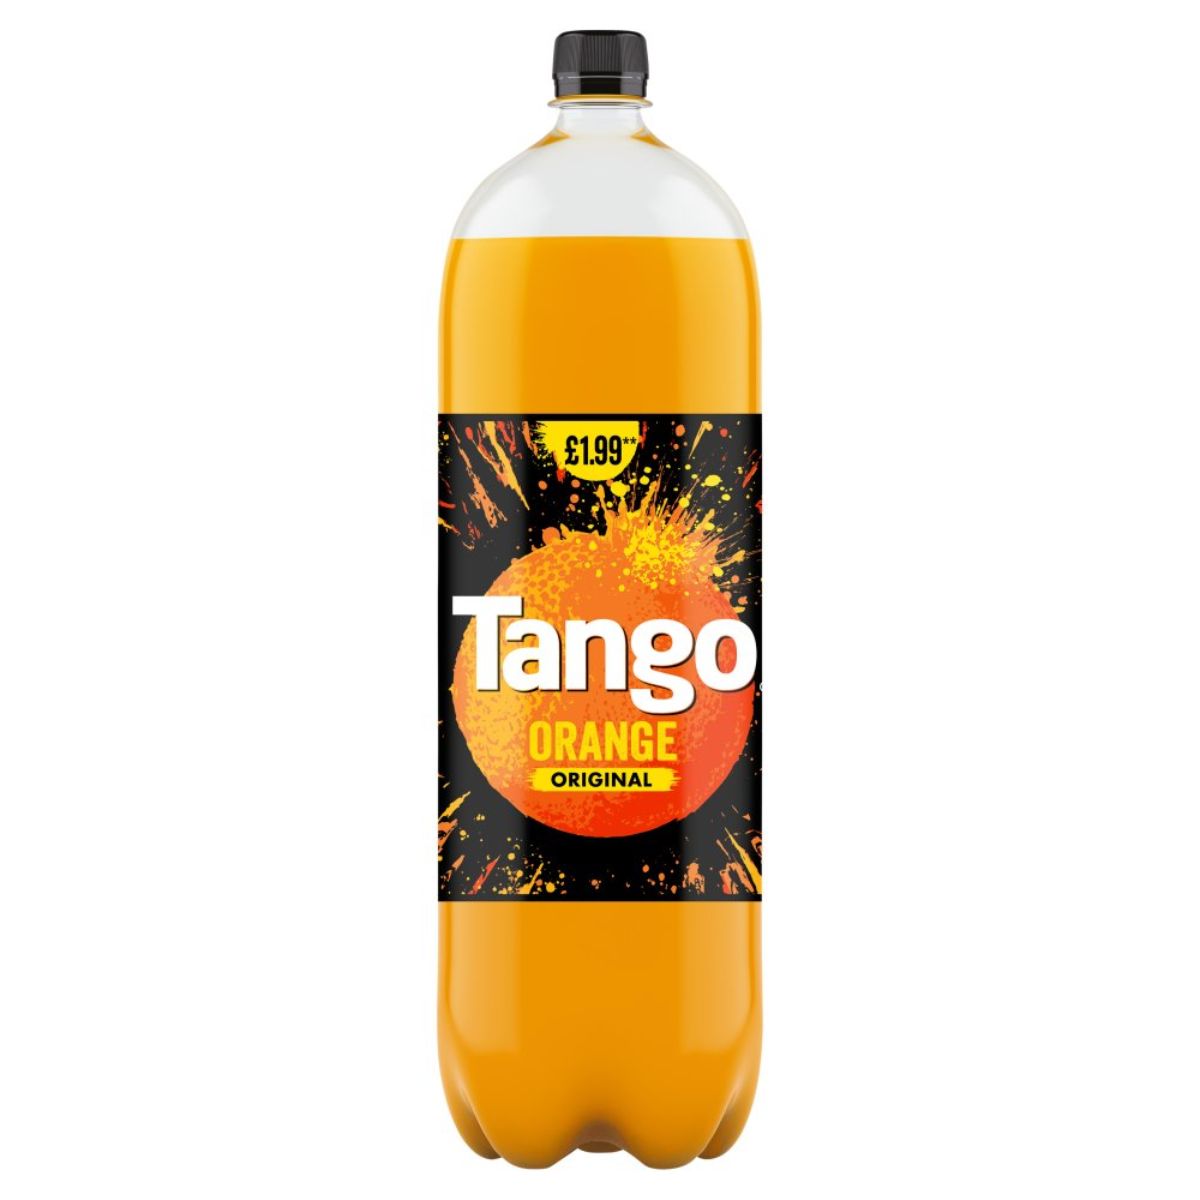 A bottle of Tango - Orange Original - 2L on a white background.